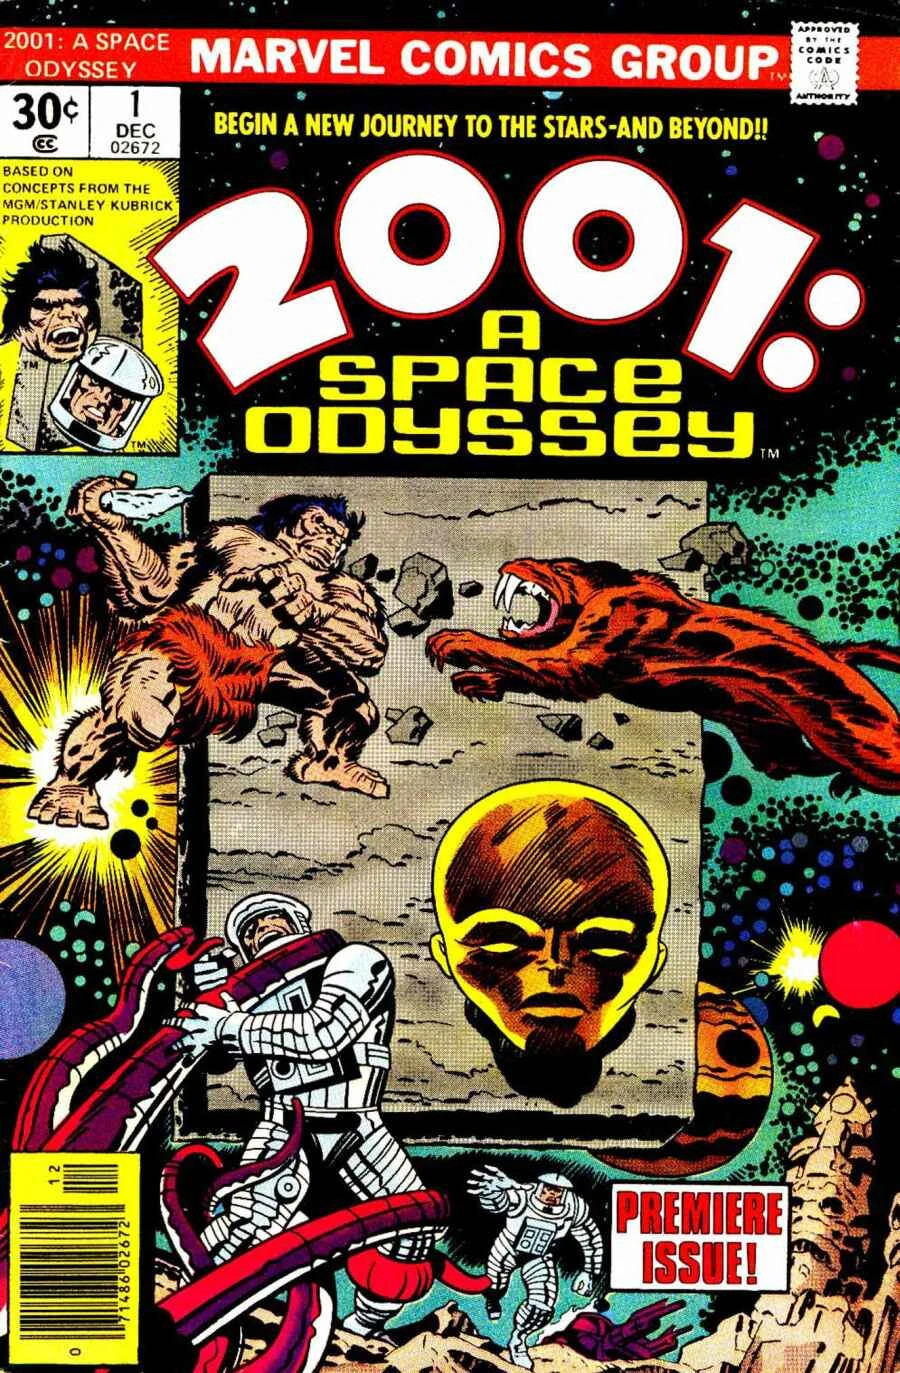 2001: A Space Odyssey vol. 2 #1, 1976, Jack Kirby, Marvel Comics Group